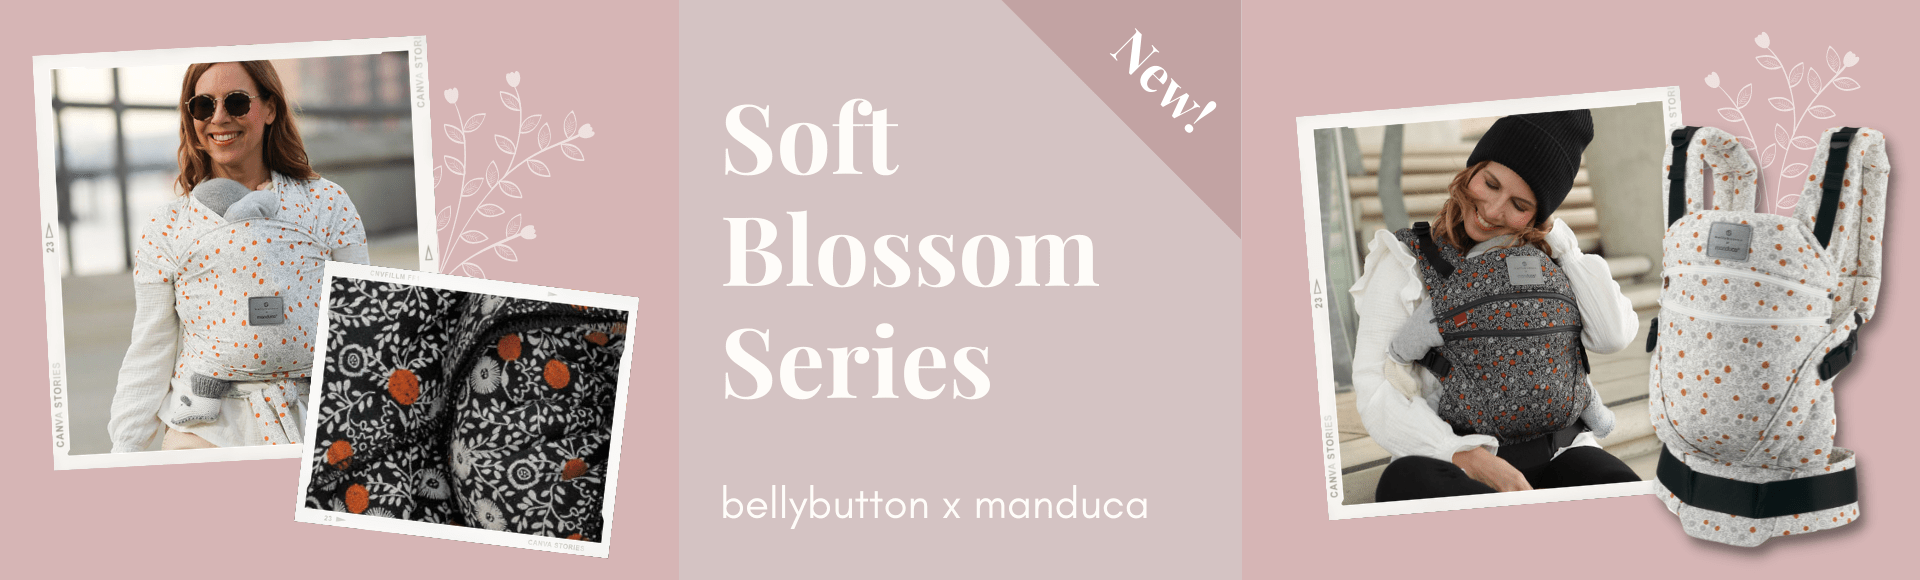 manduca Soft Blossom launch banner